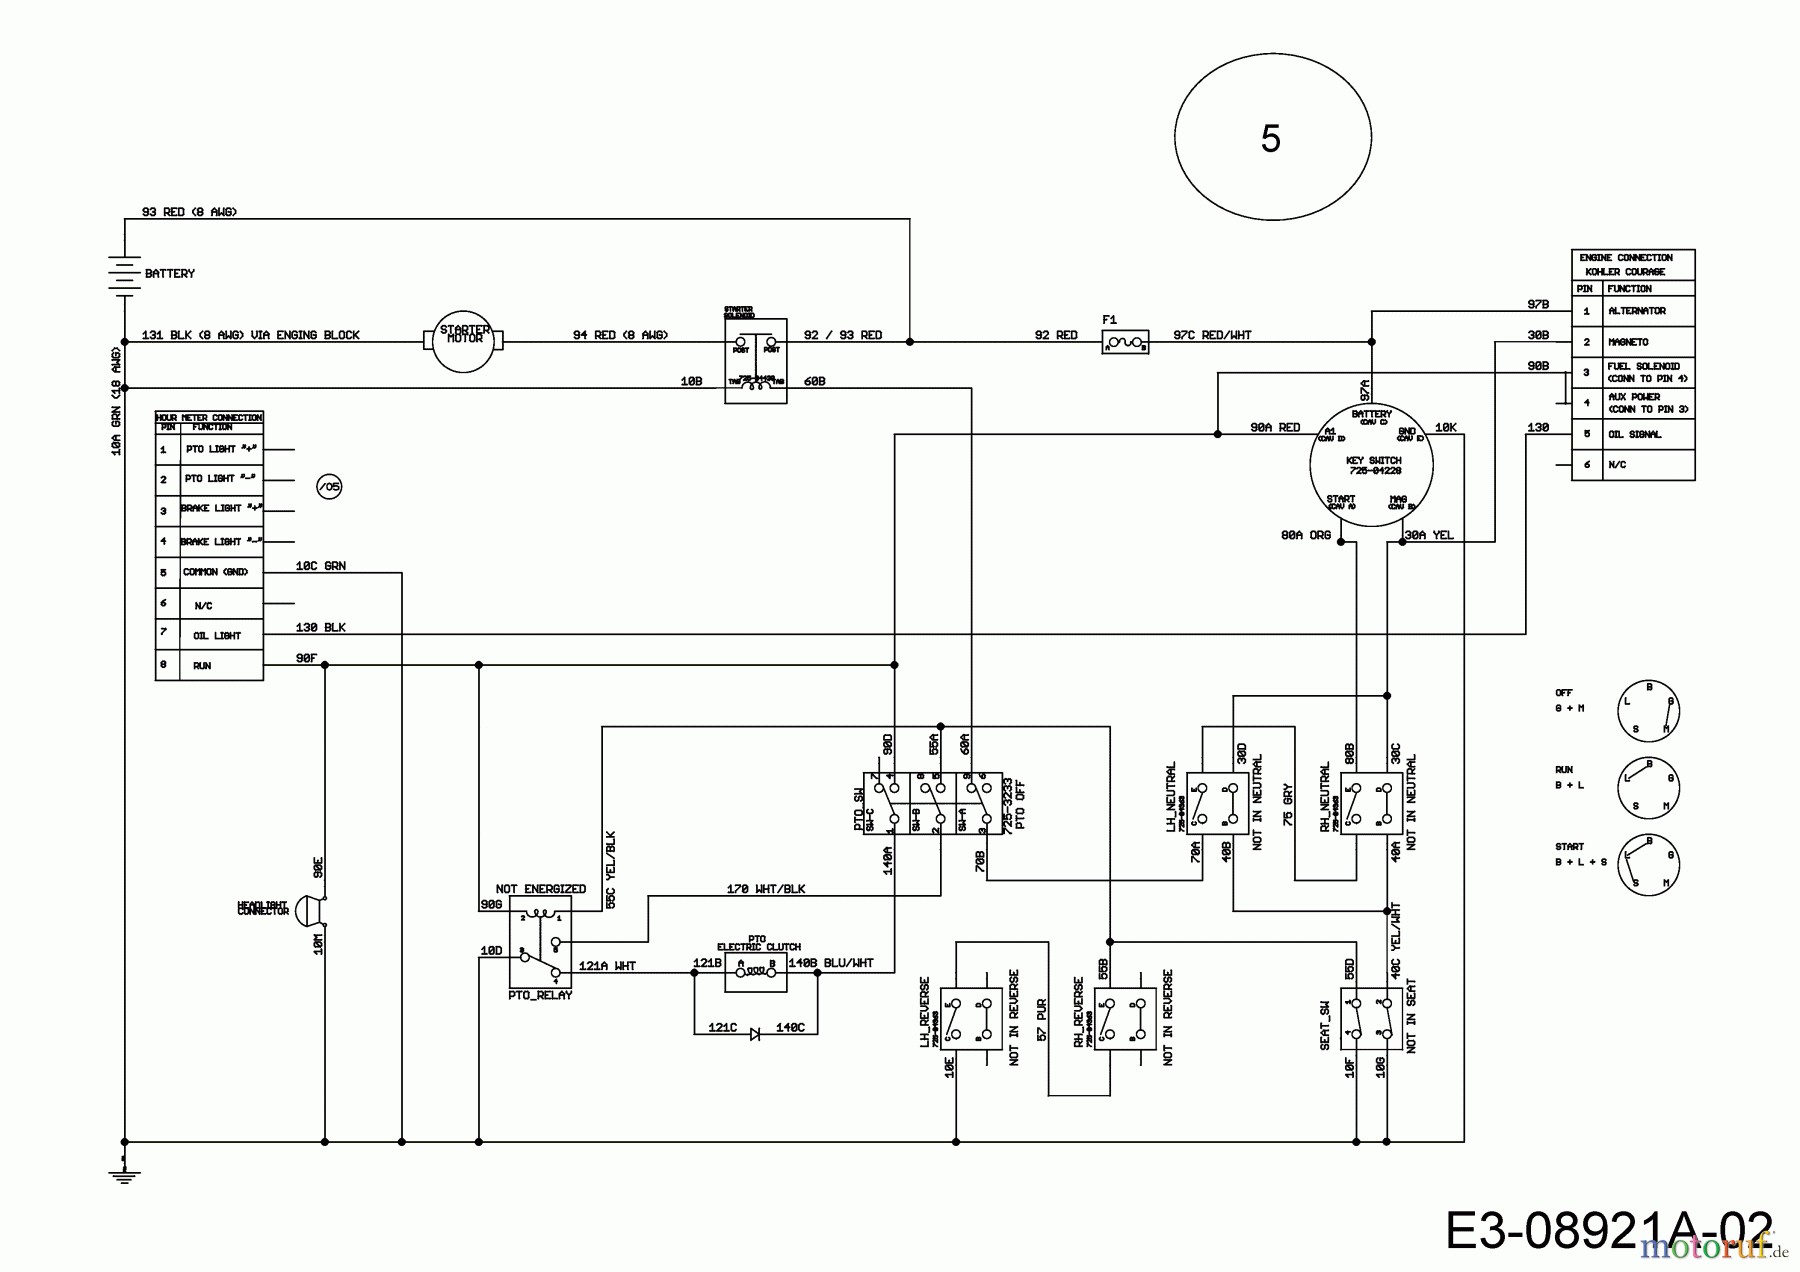 Mf 135 Diesel Wiring Diagram Gb 5514] Massey Ferguson Wiring Diagram Pdf Download Diagram Of Mf 135 Diesel Wiring Diagram